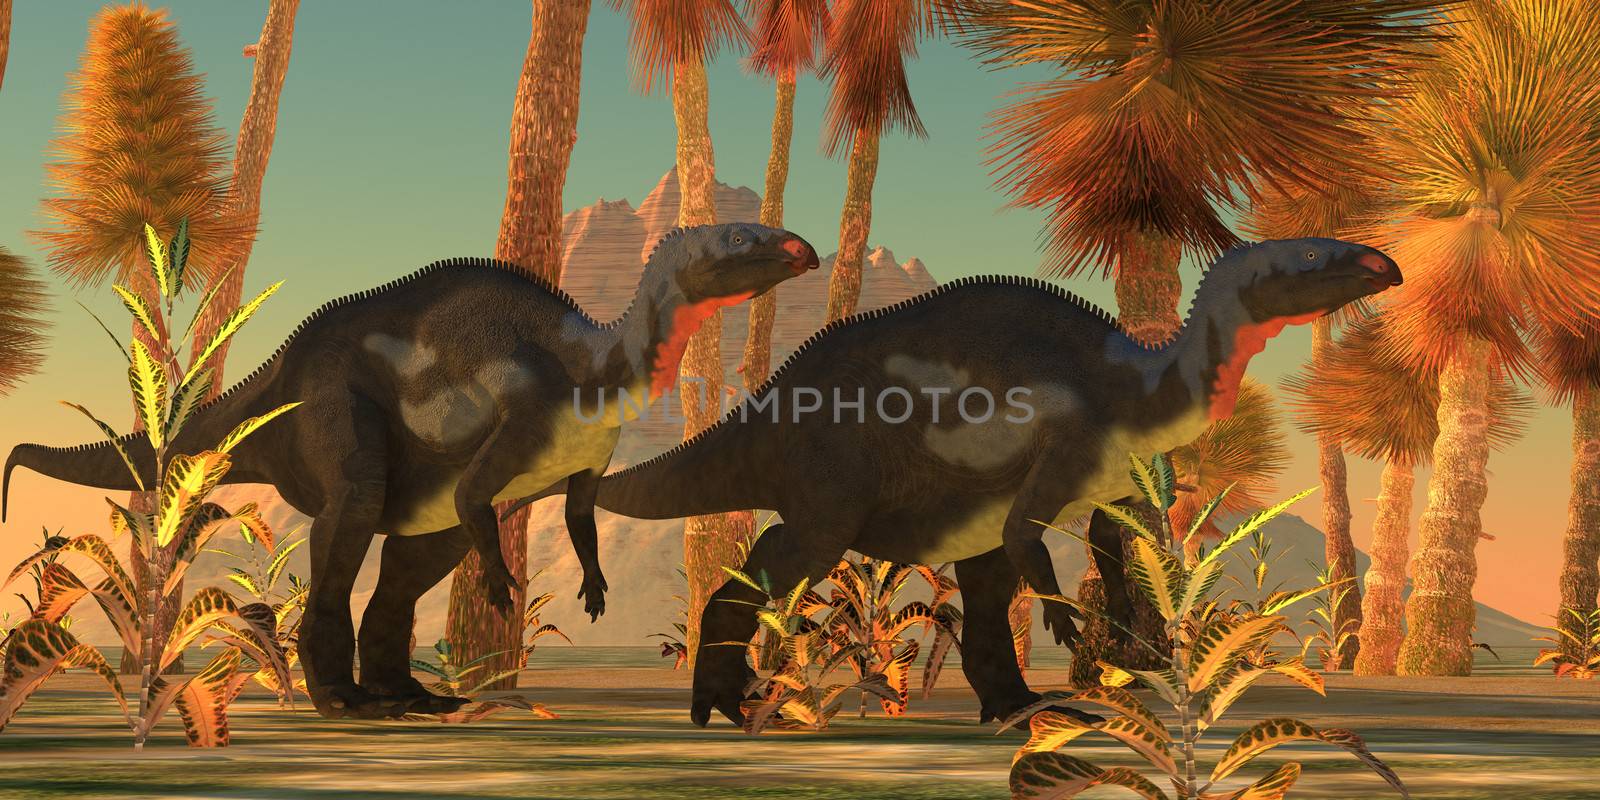 Camptosaurus Dinosaurs by Catmando